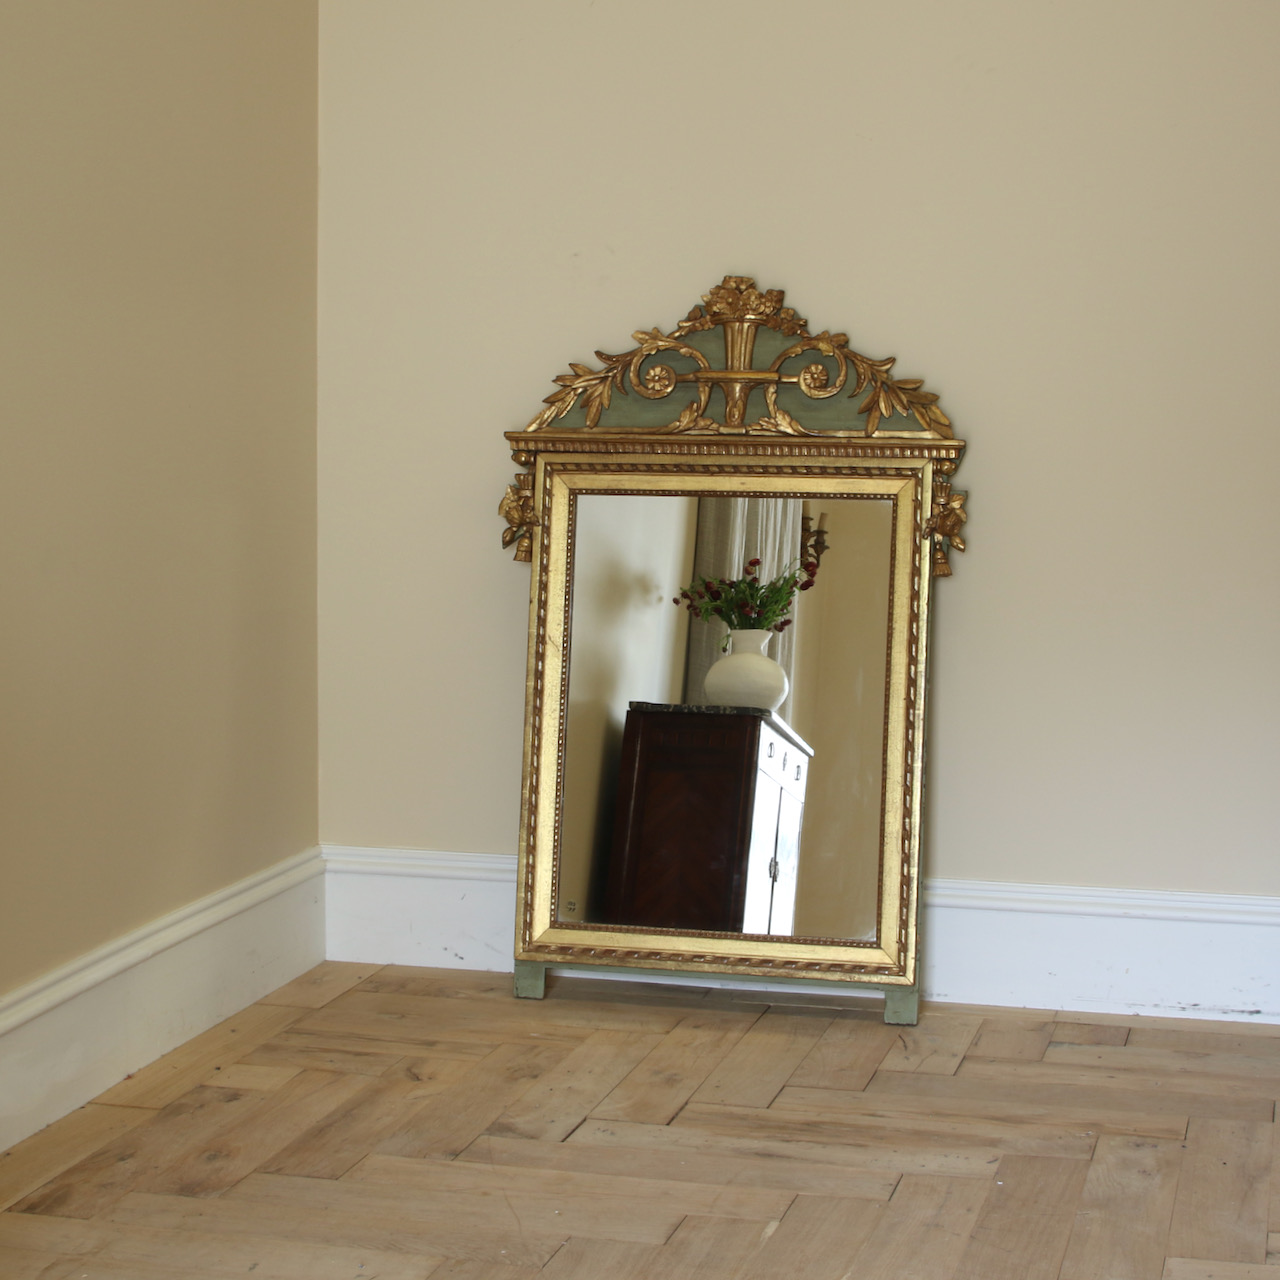 132-77 - A 19th Century Neoclassical Mirror